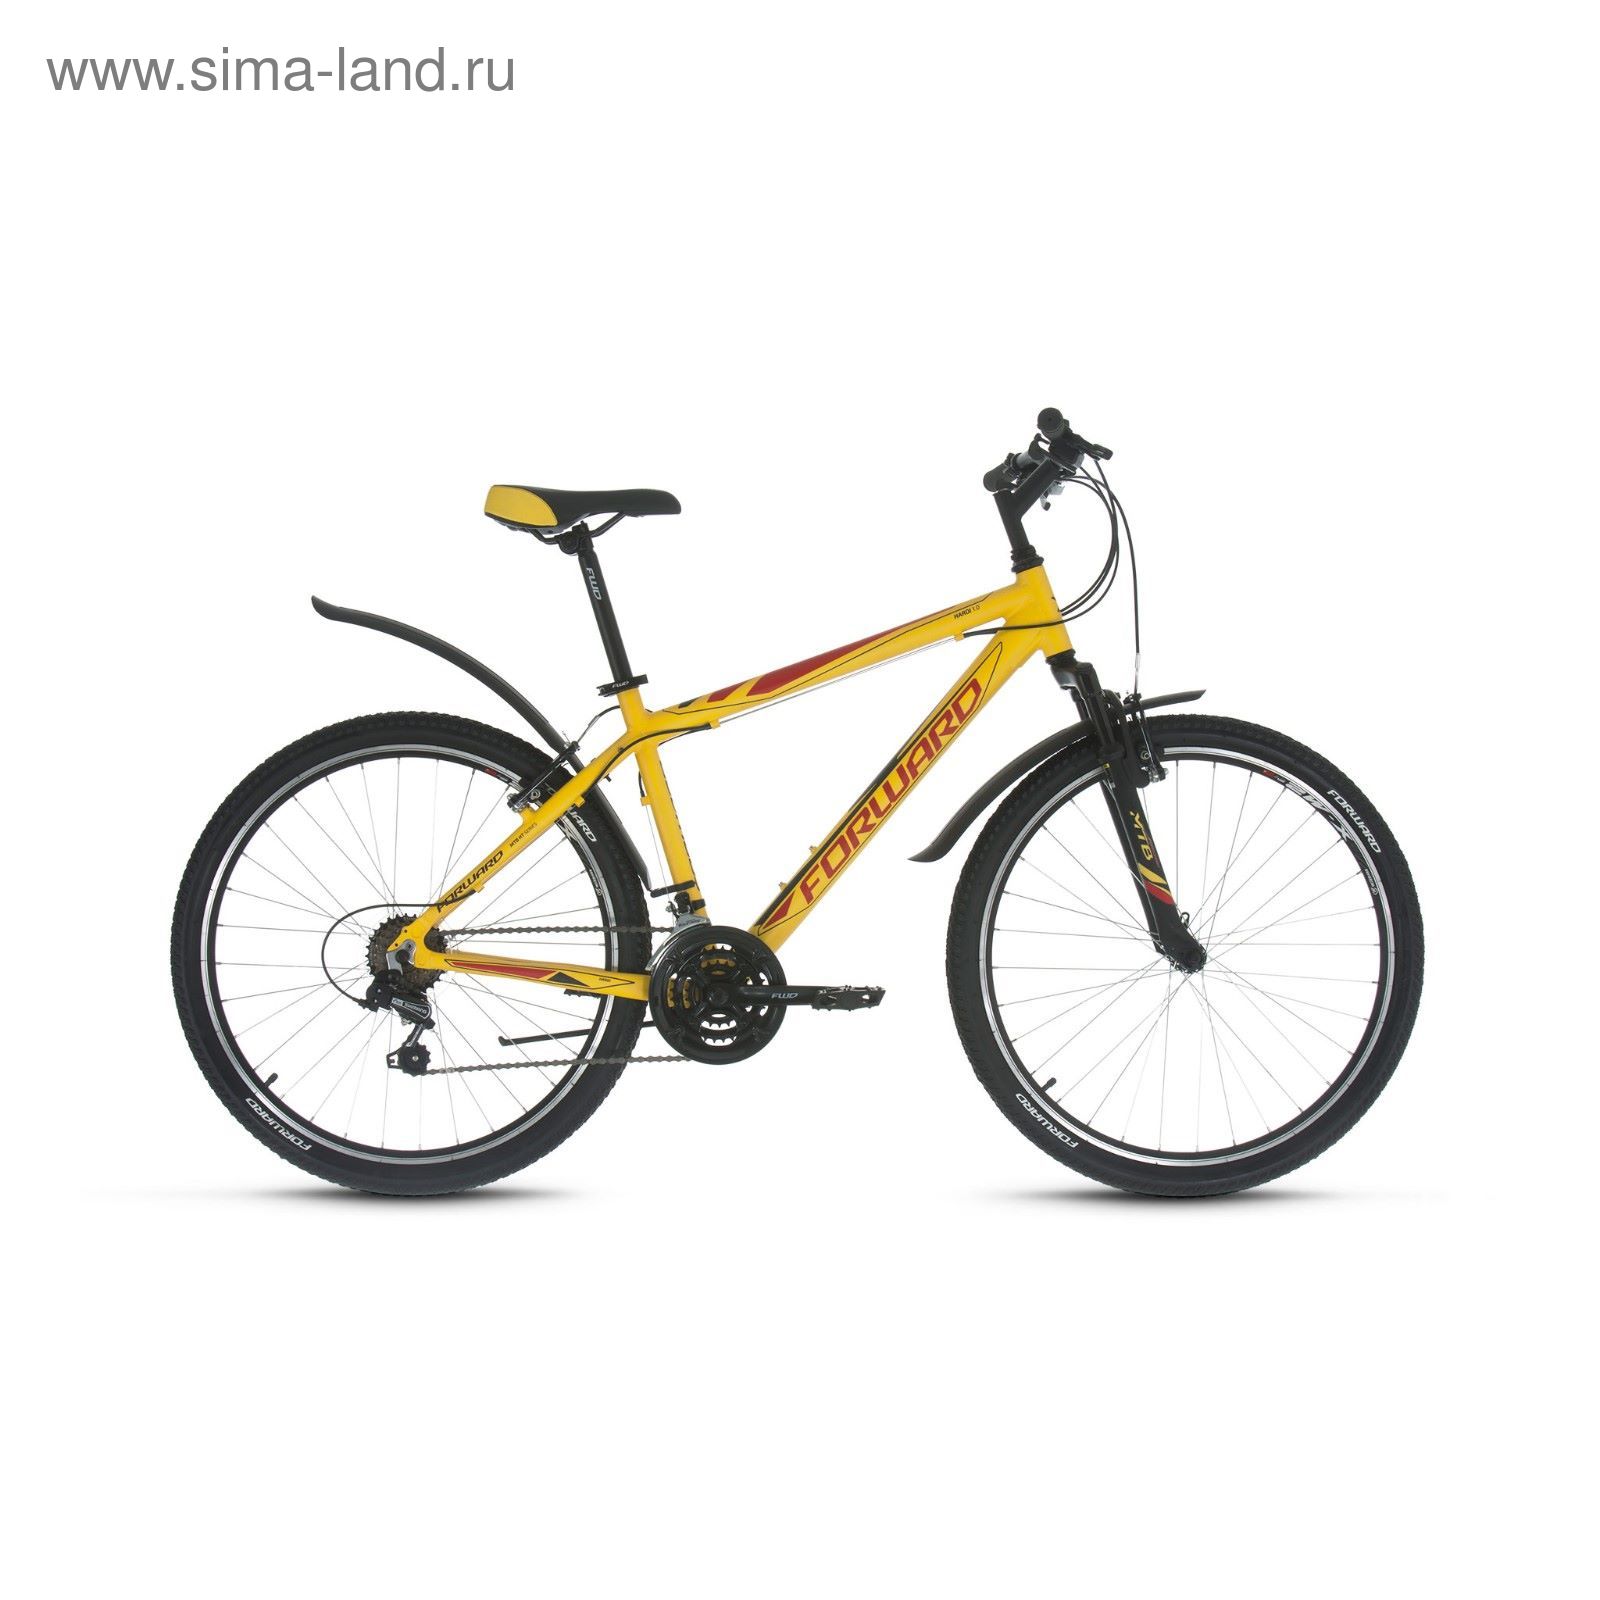 Велосипед 26" Forward Hardi 1.0, 2017, цвет жёлтый мат., размер 17"